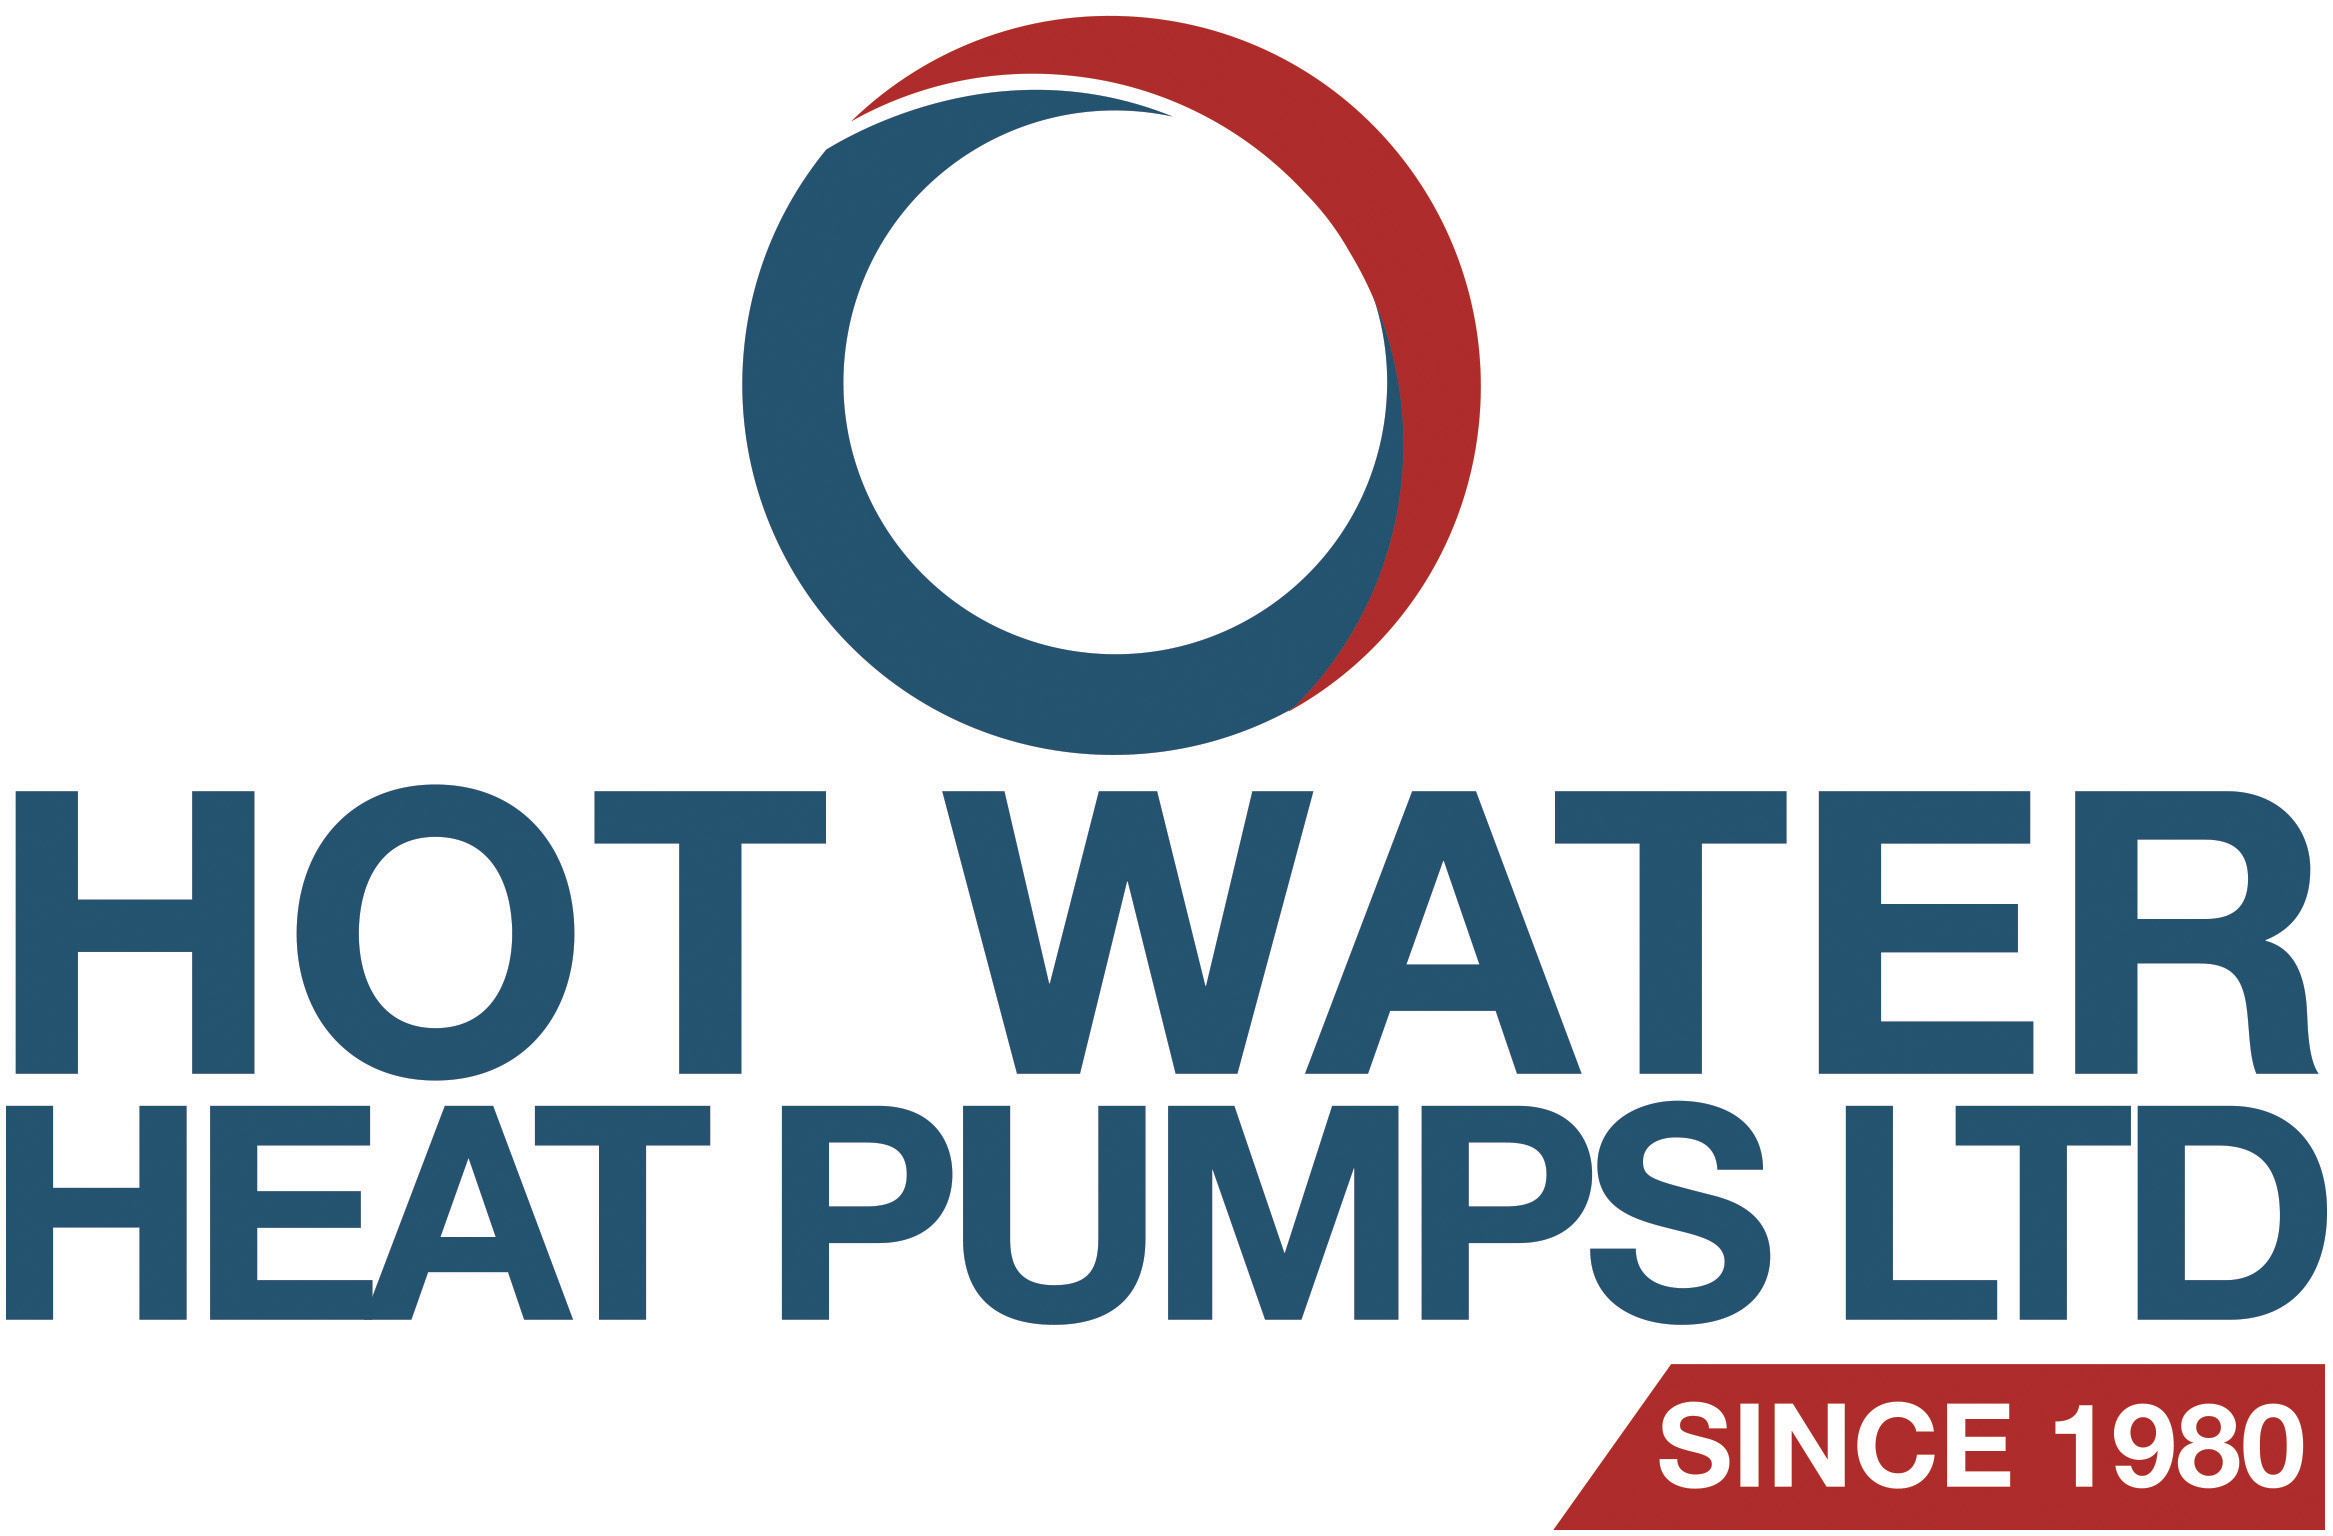 Hot Water Heat Pumps Ltd.